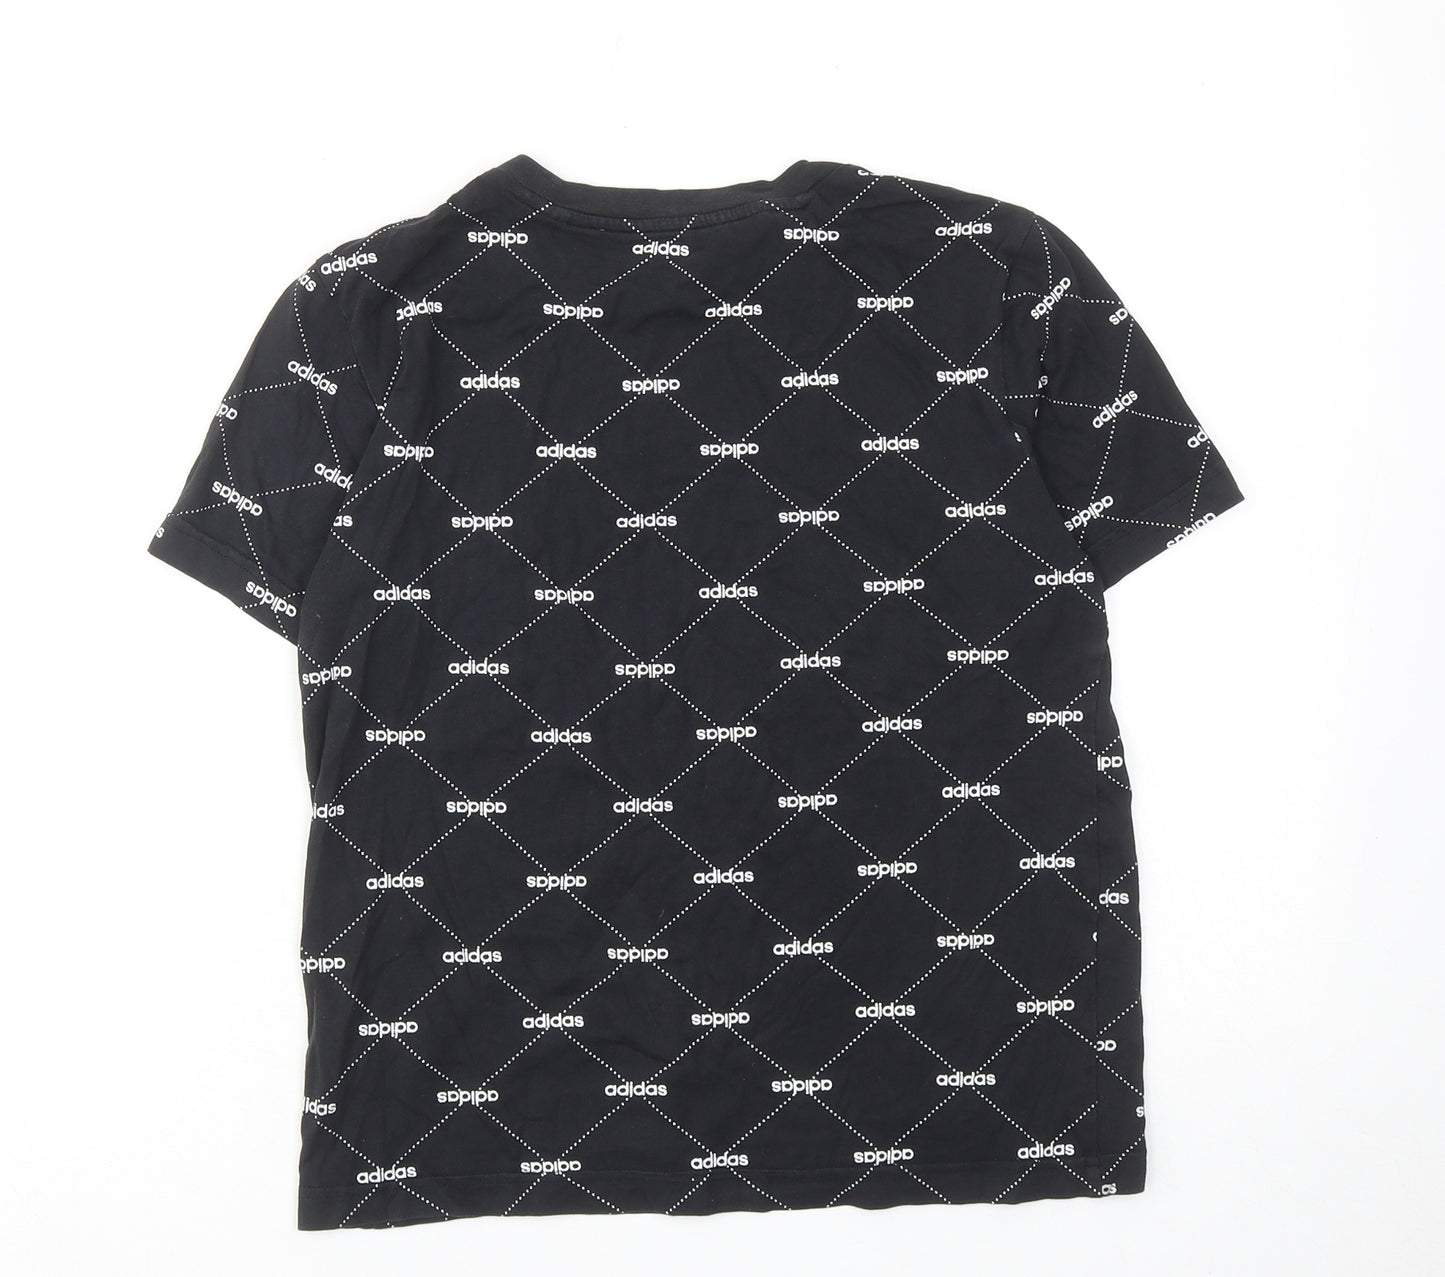 adidas Boys Black Argyle/Diamond Cotton Basic T-Shirt Size 11-12 Years Round Neck Pullover